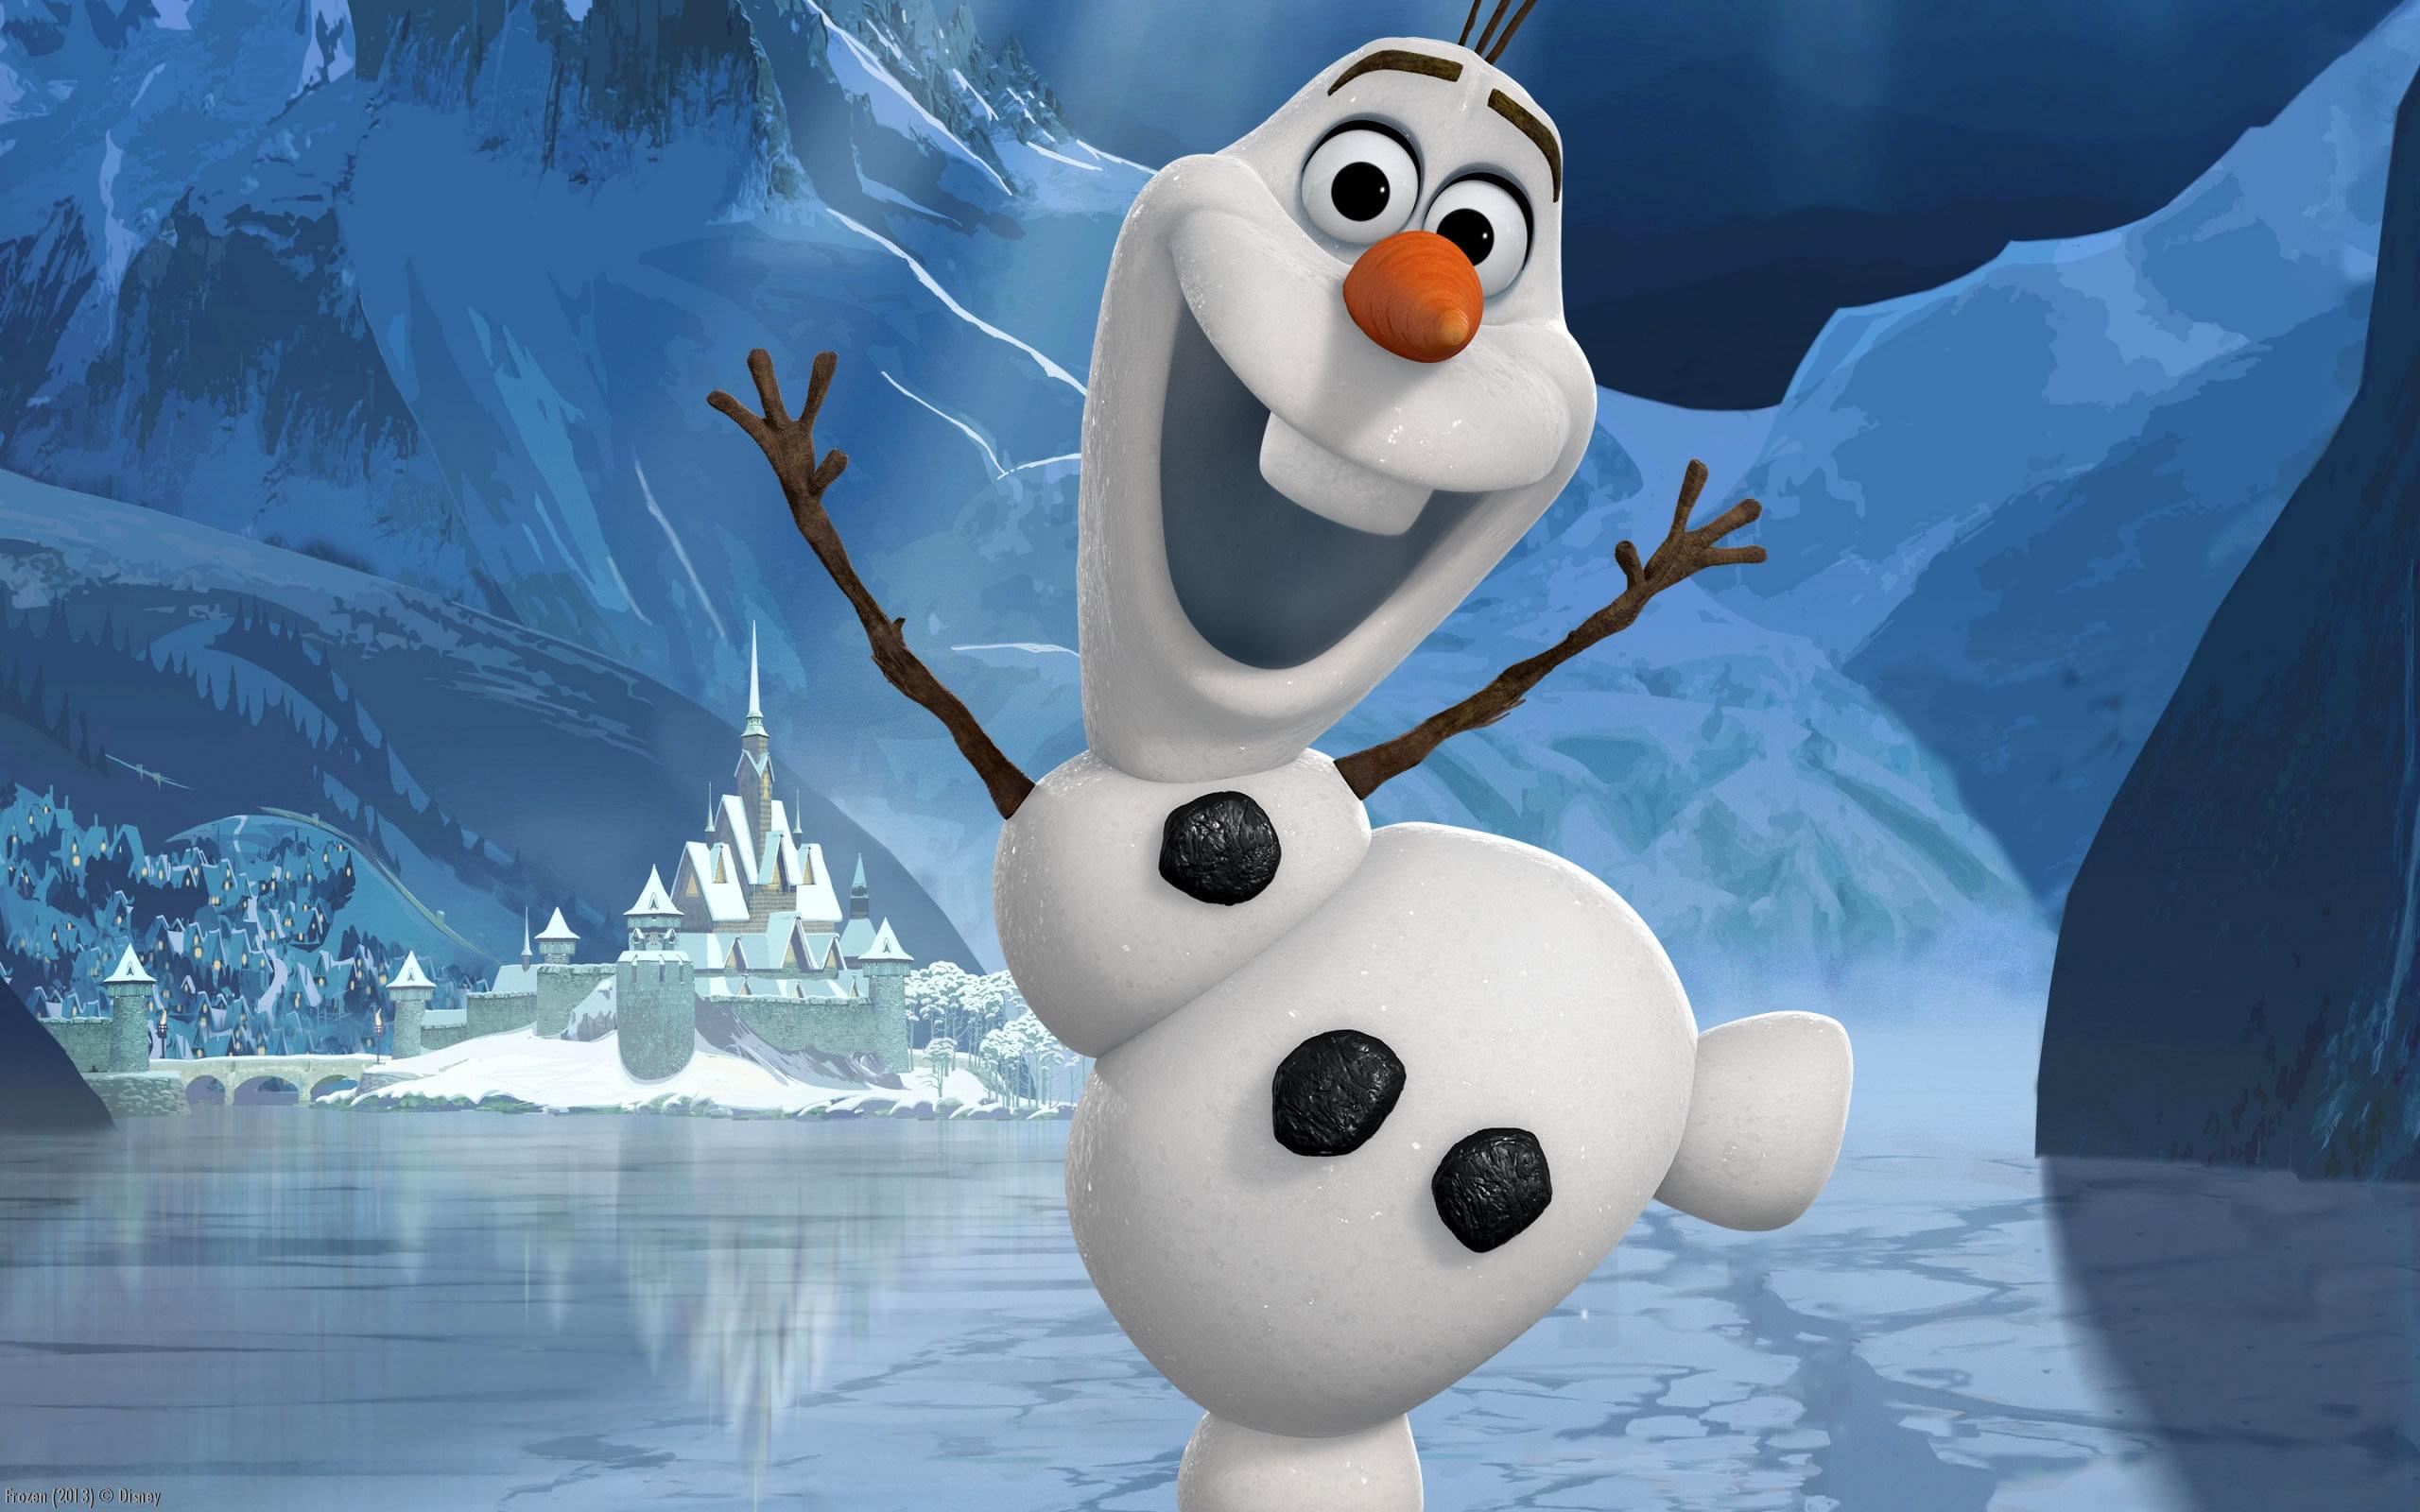 Olaf (Frozen) wallpaper HD for desktop background